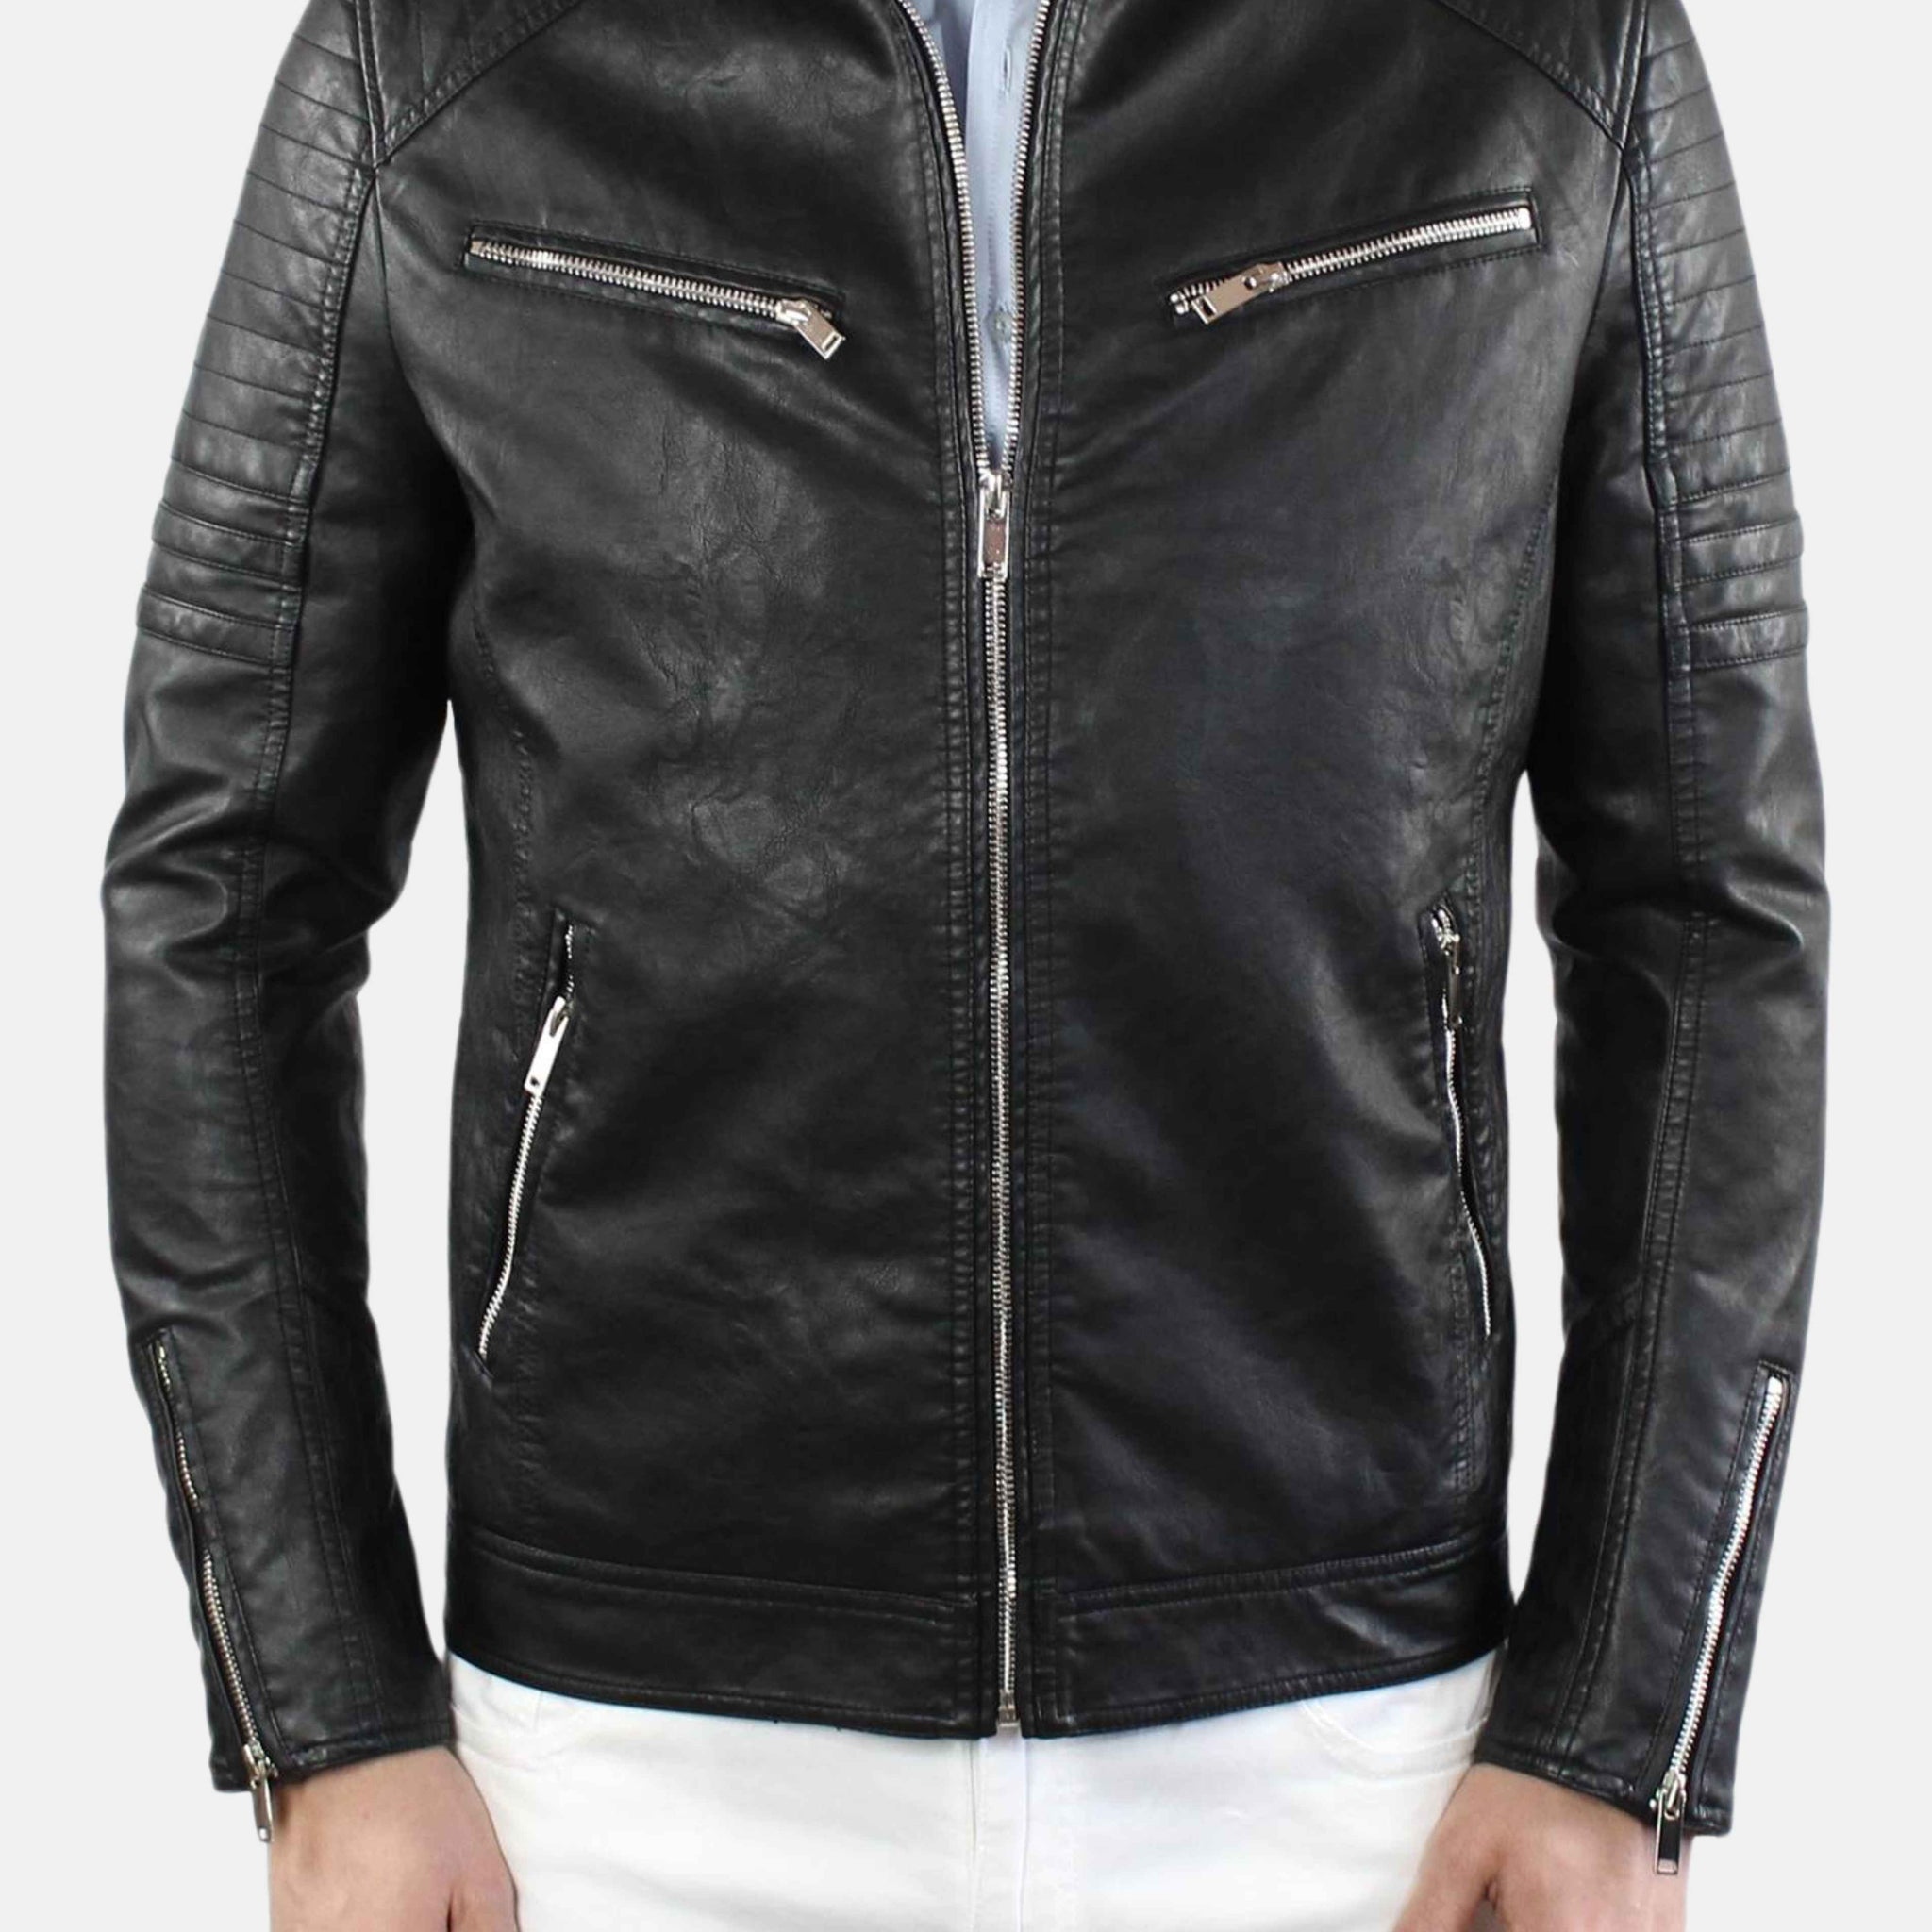 Biker jacket in black nail leather